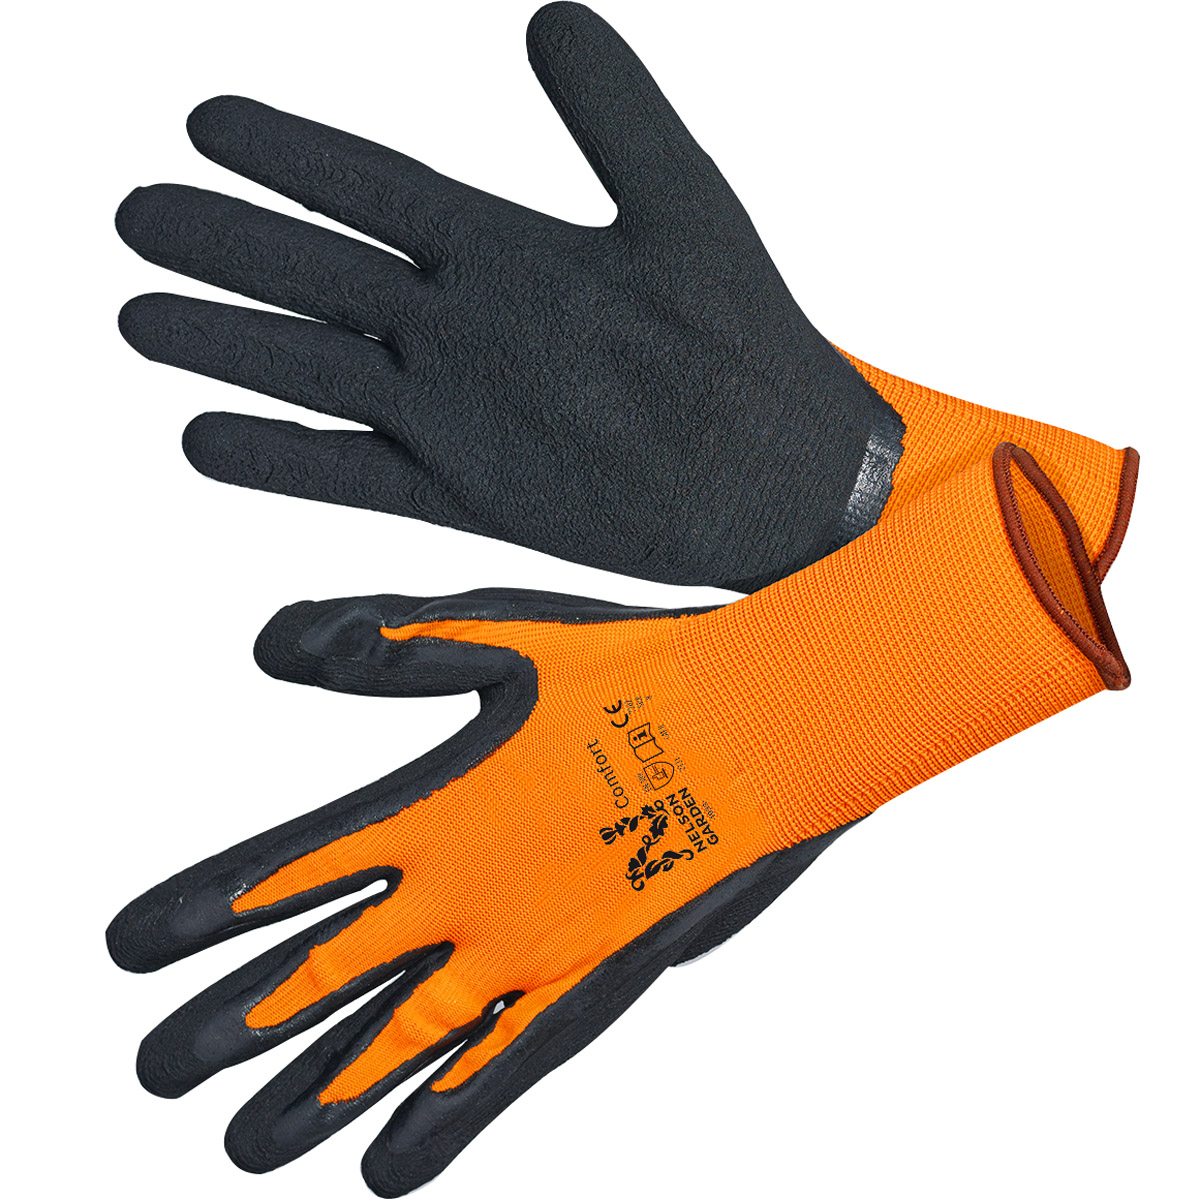 Handske Comfort, storlek 8 orange/svart